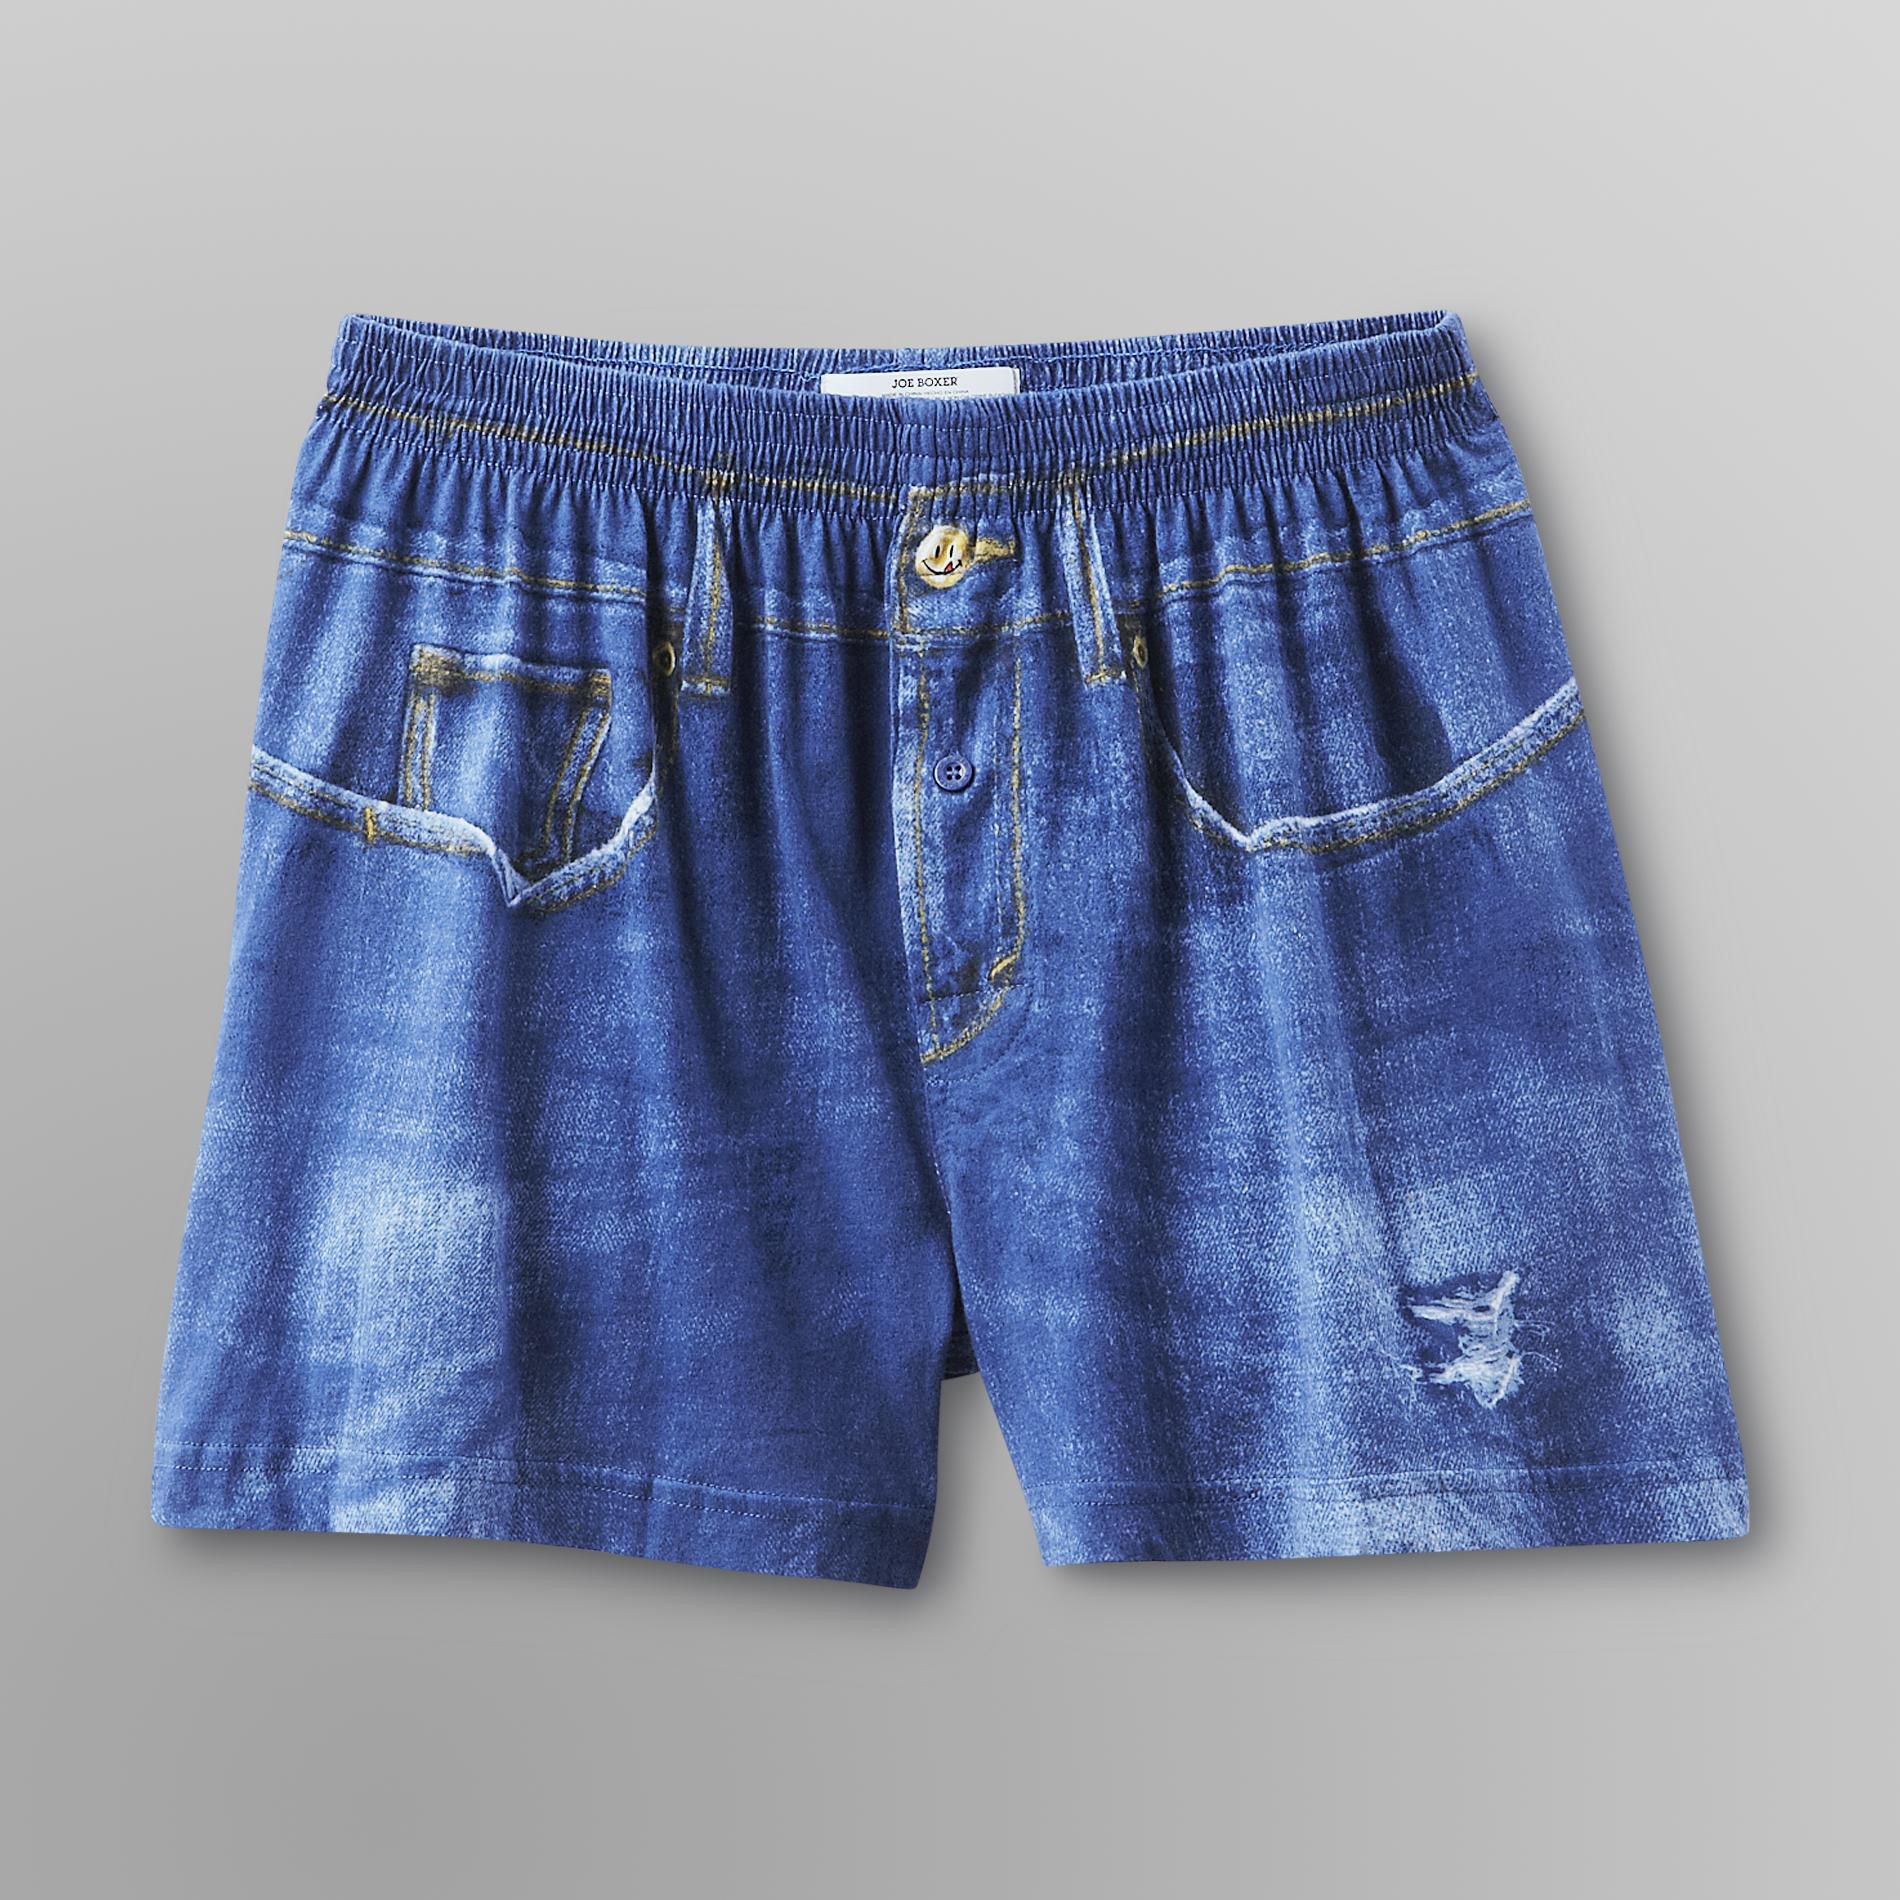 Joe Boxer Men's Fleece Pajama Shorts - Denim Print